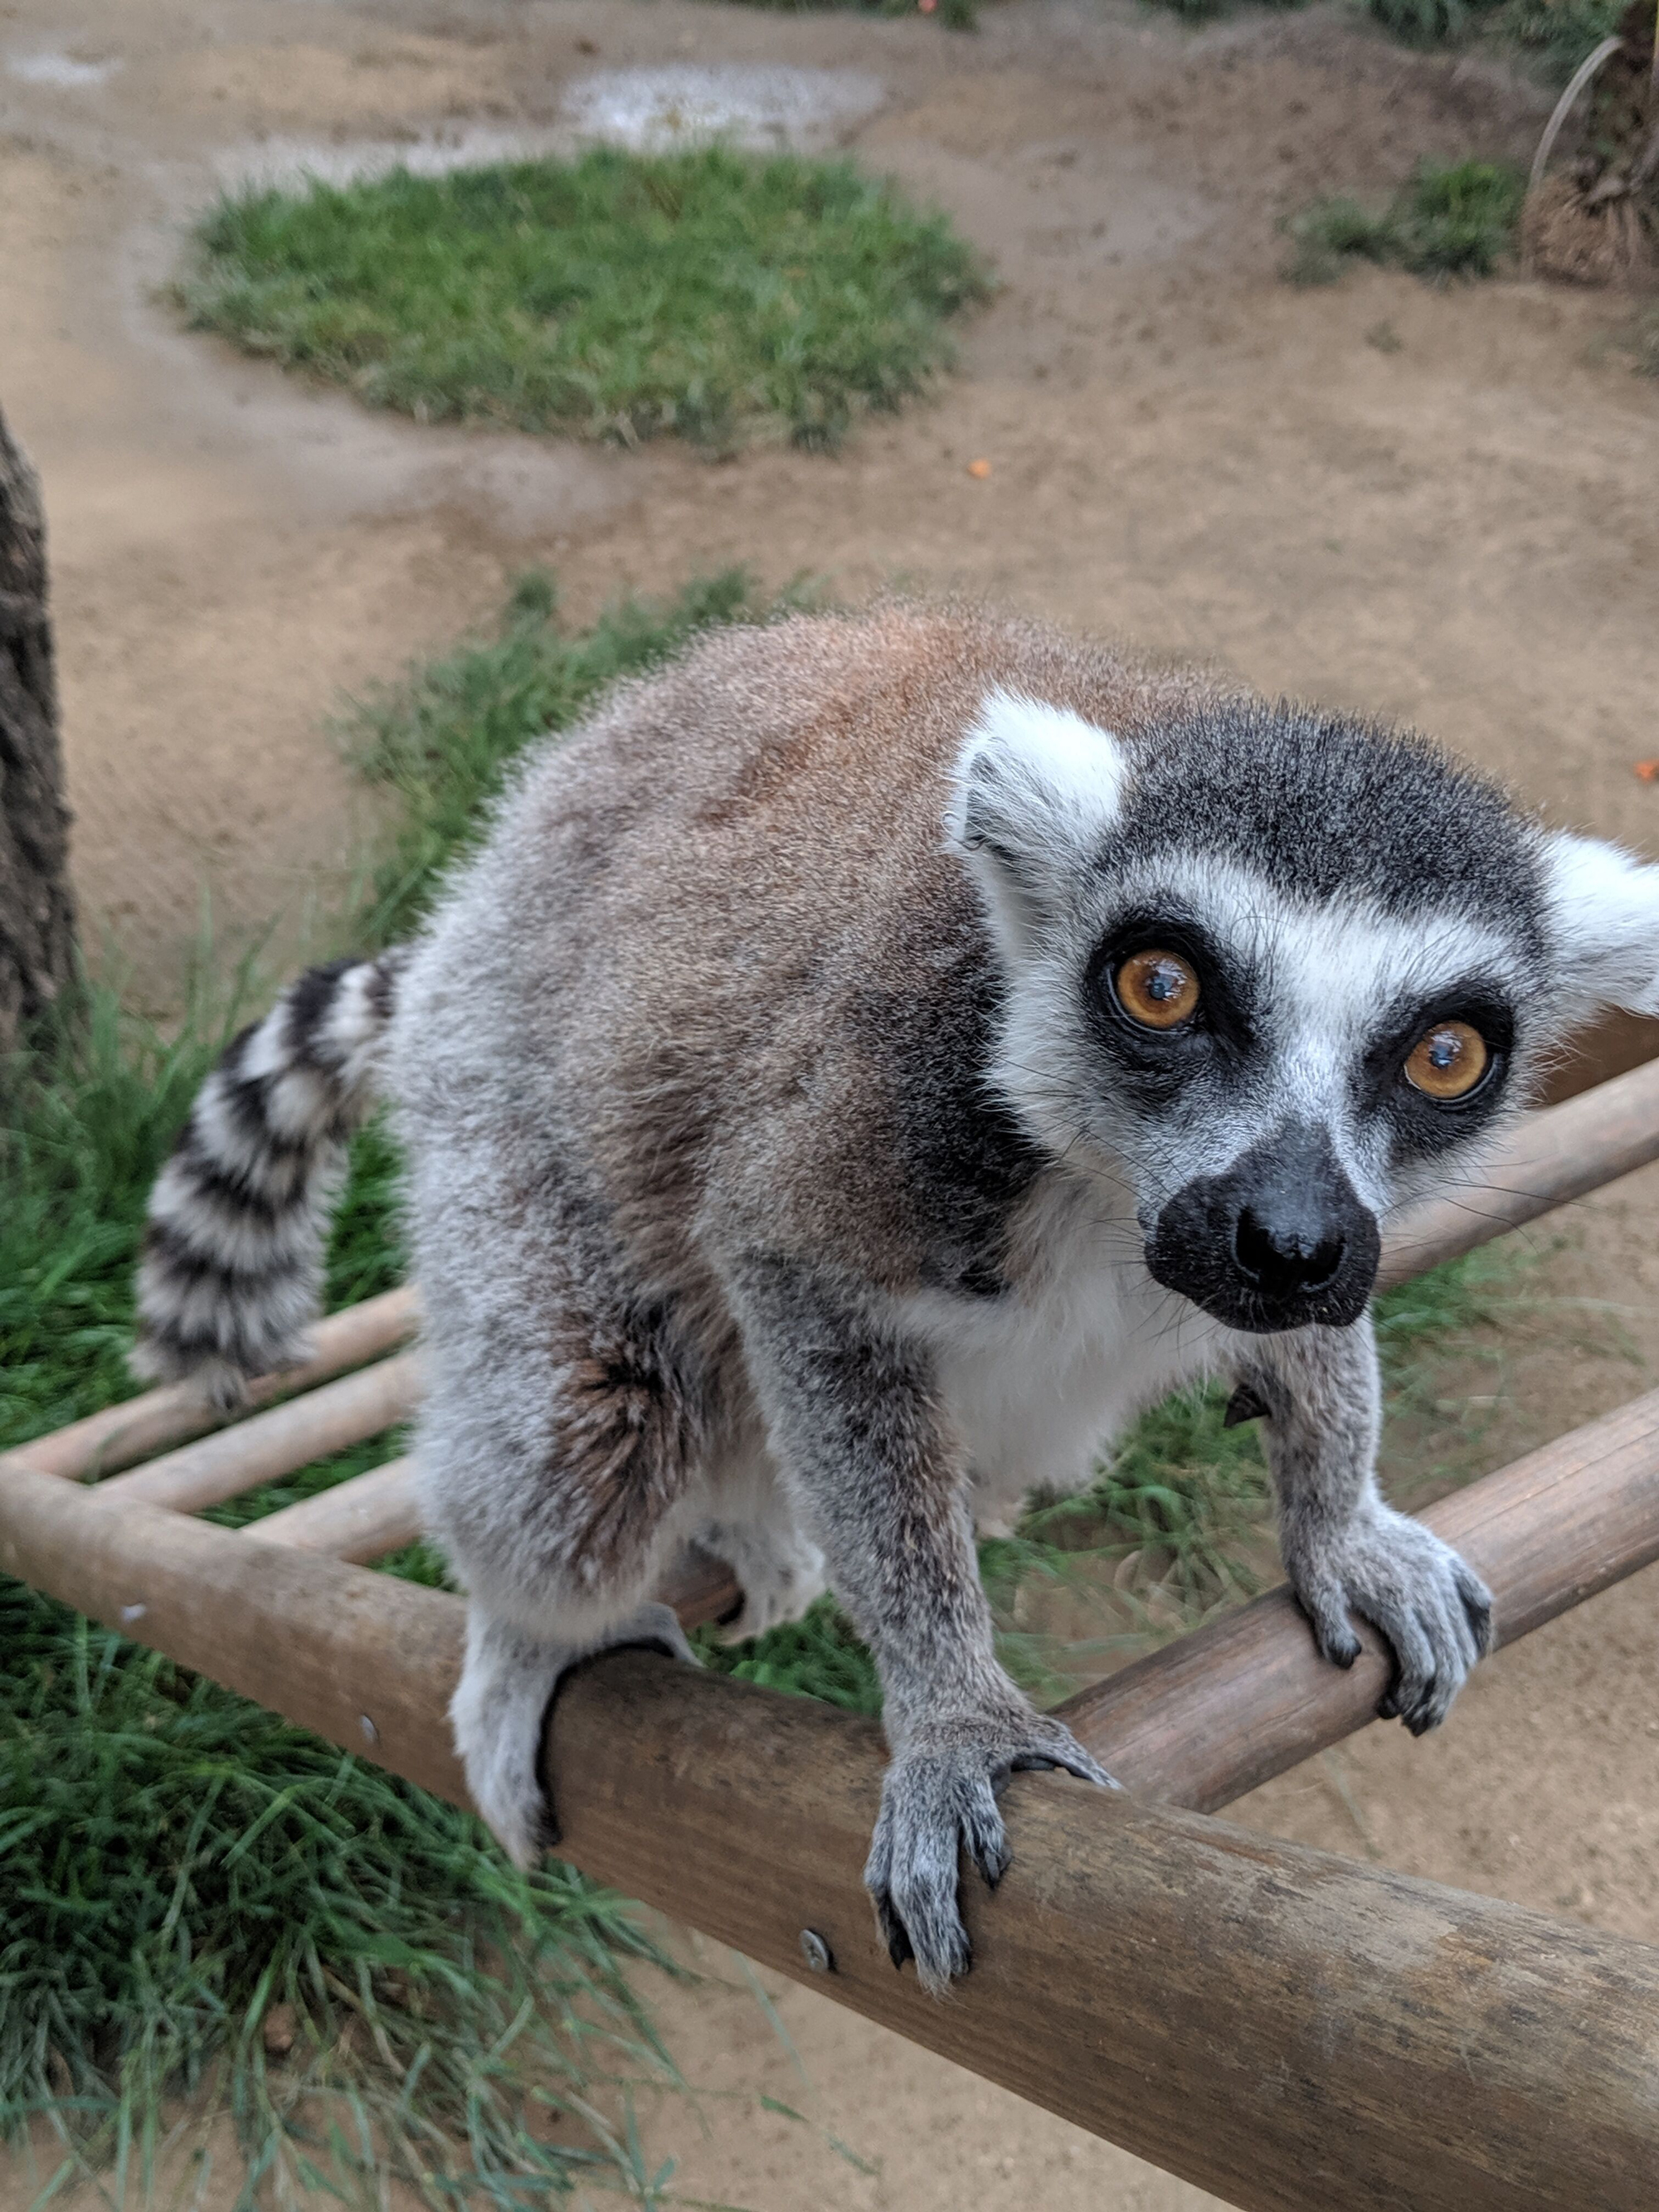 The Case of the Stolen Lemur — FBI